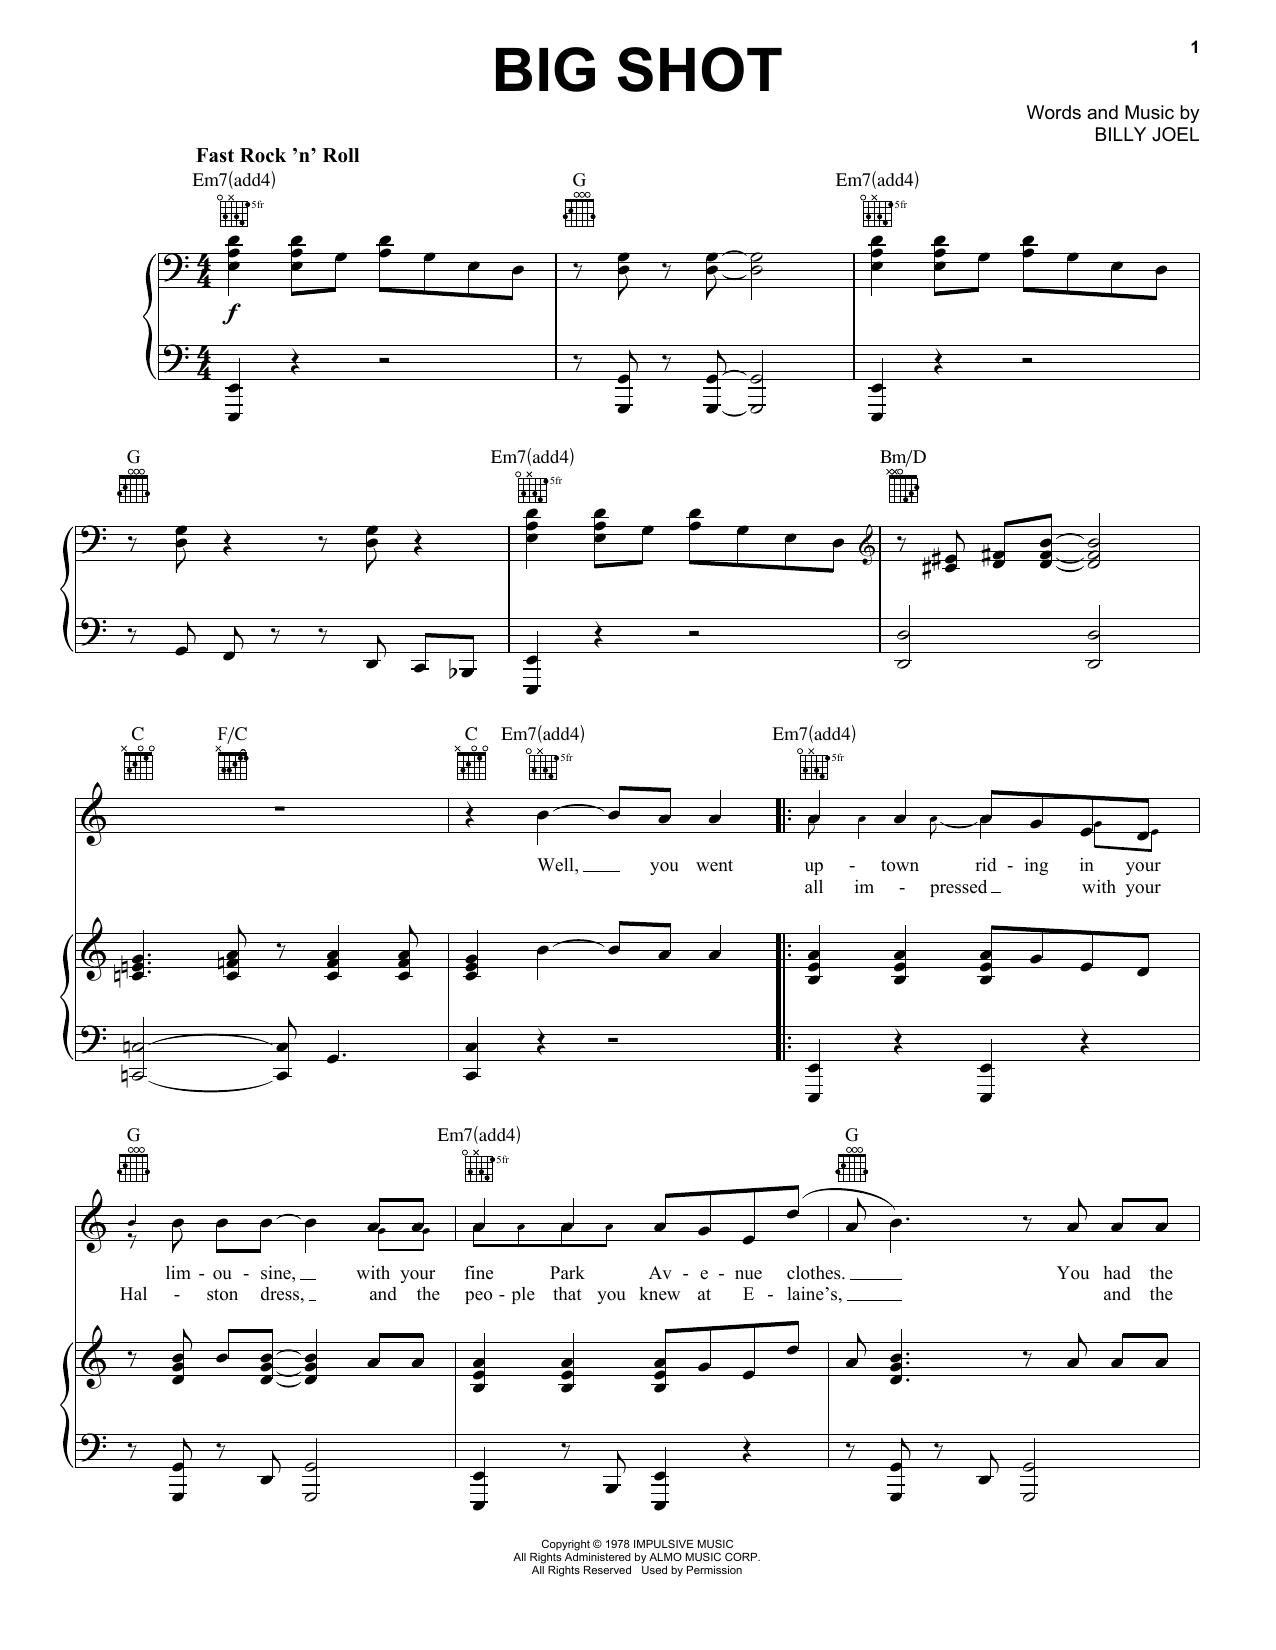 Billy Joel Big Shot Sheet Music Notes & Chords for Melody Line, Lyrics & Chords - Download or Print PDF